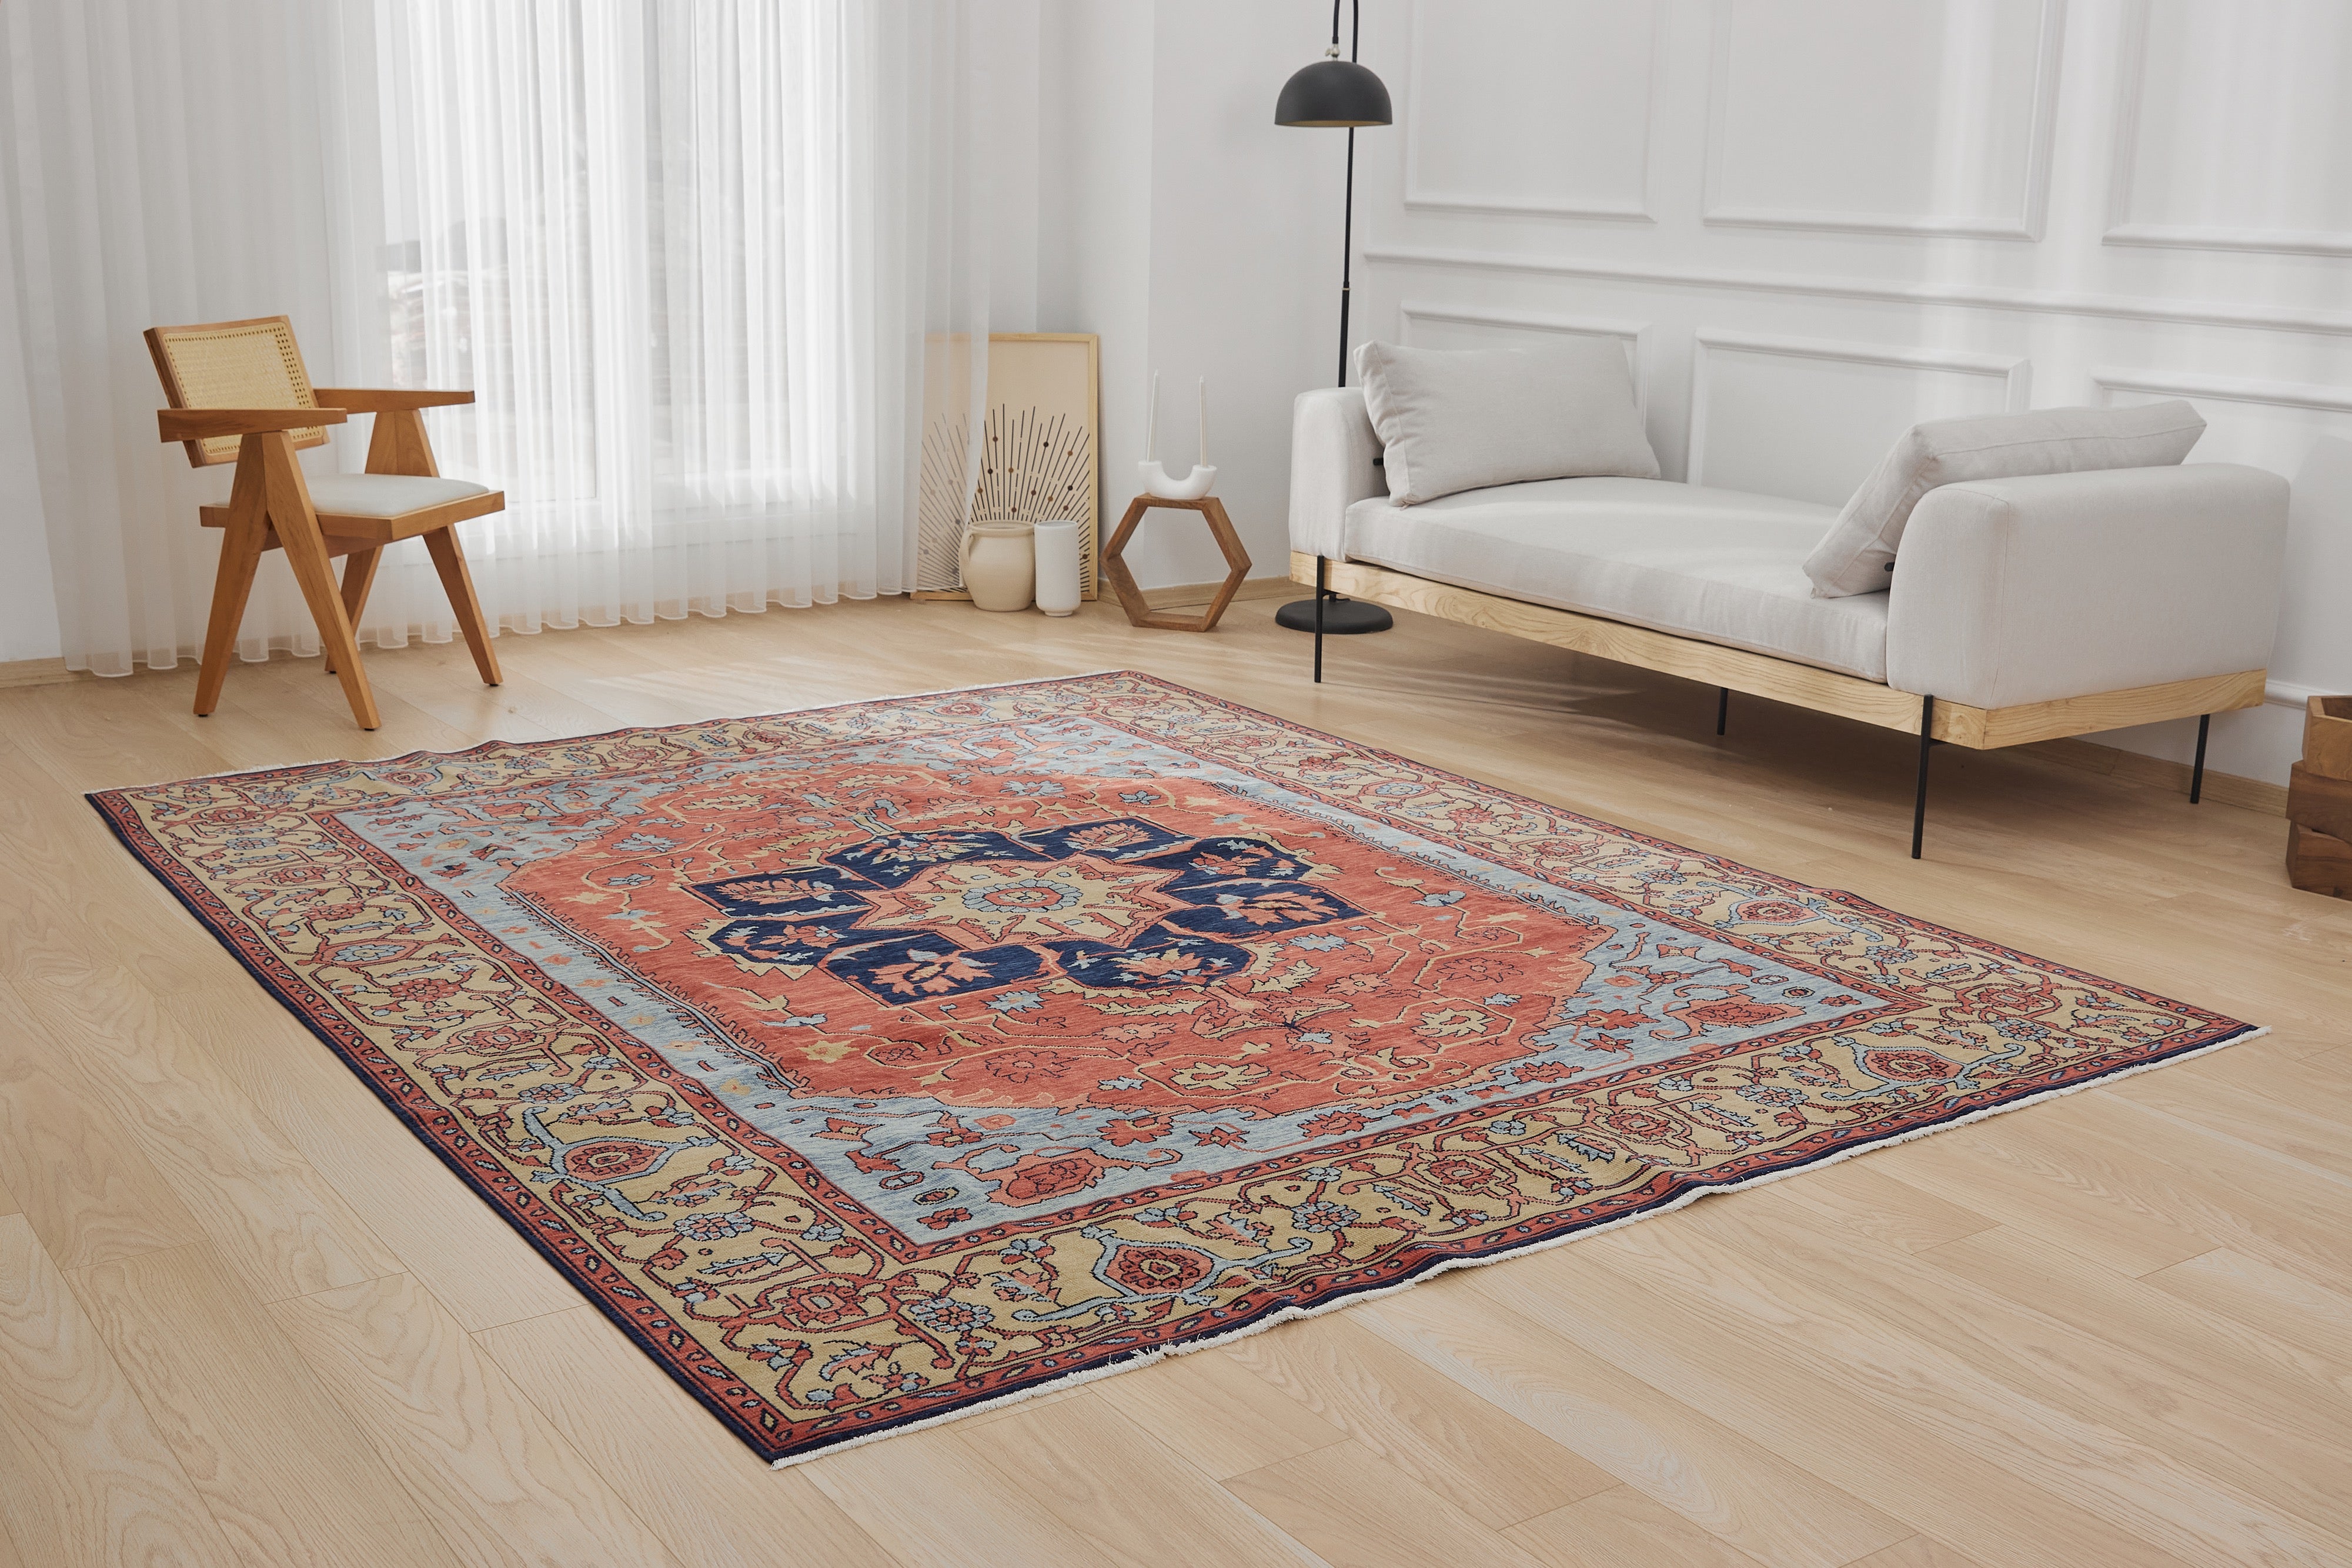 Oriental Radiance - Soleil's Professional Carpet Design